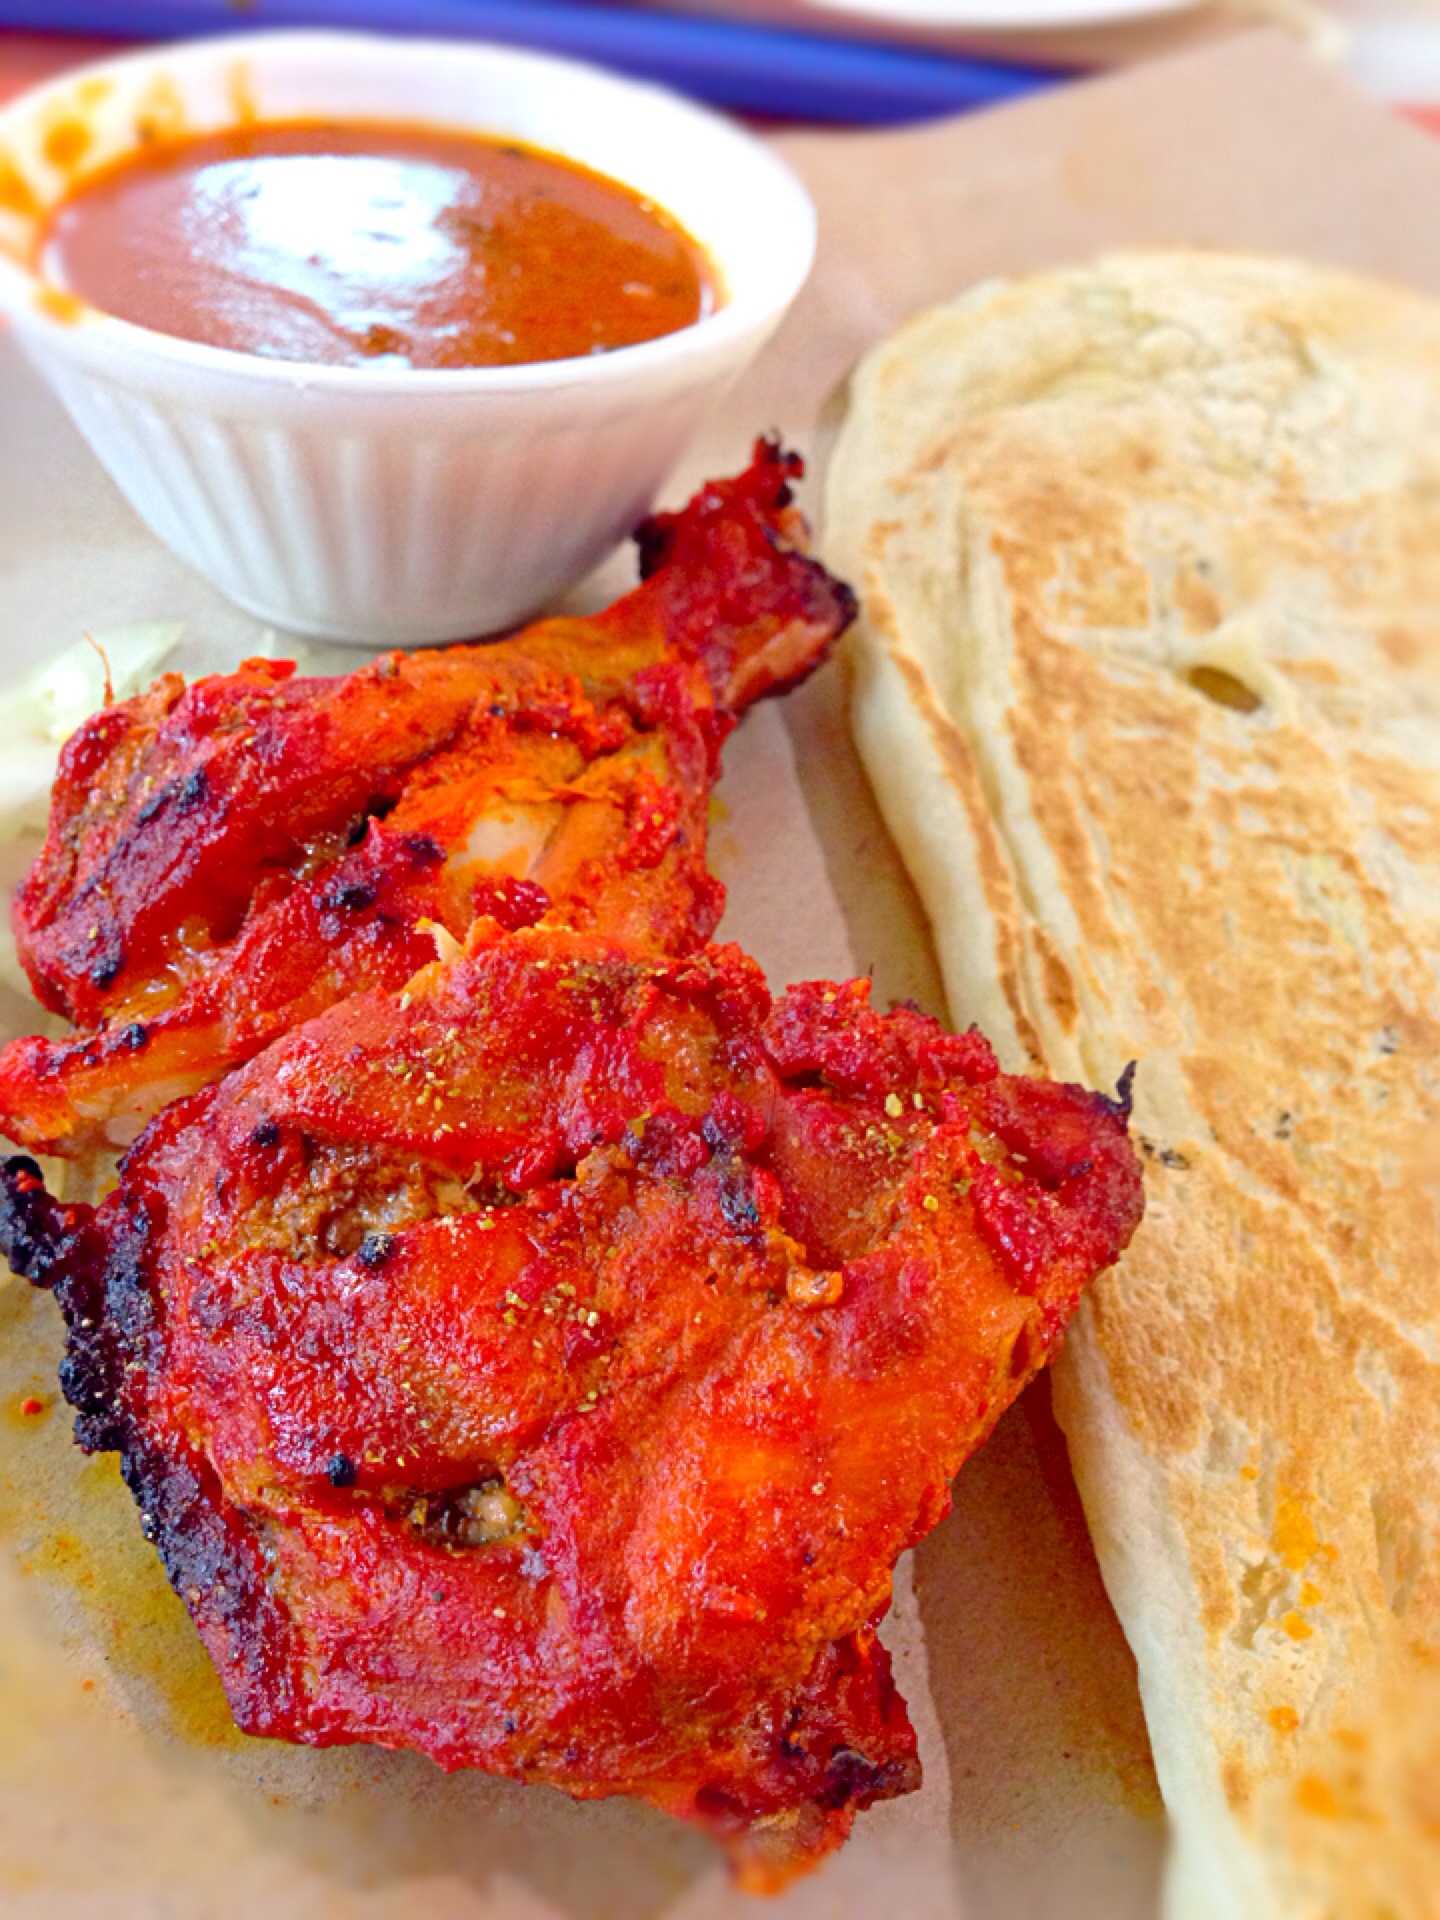 Tandoori Chicken With Naan Abc Food Centrecoxiella24 Snapdish スナップディッシュ Idtuf8wa